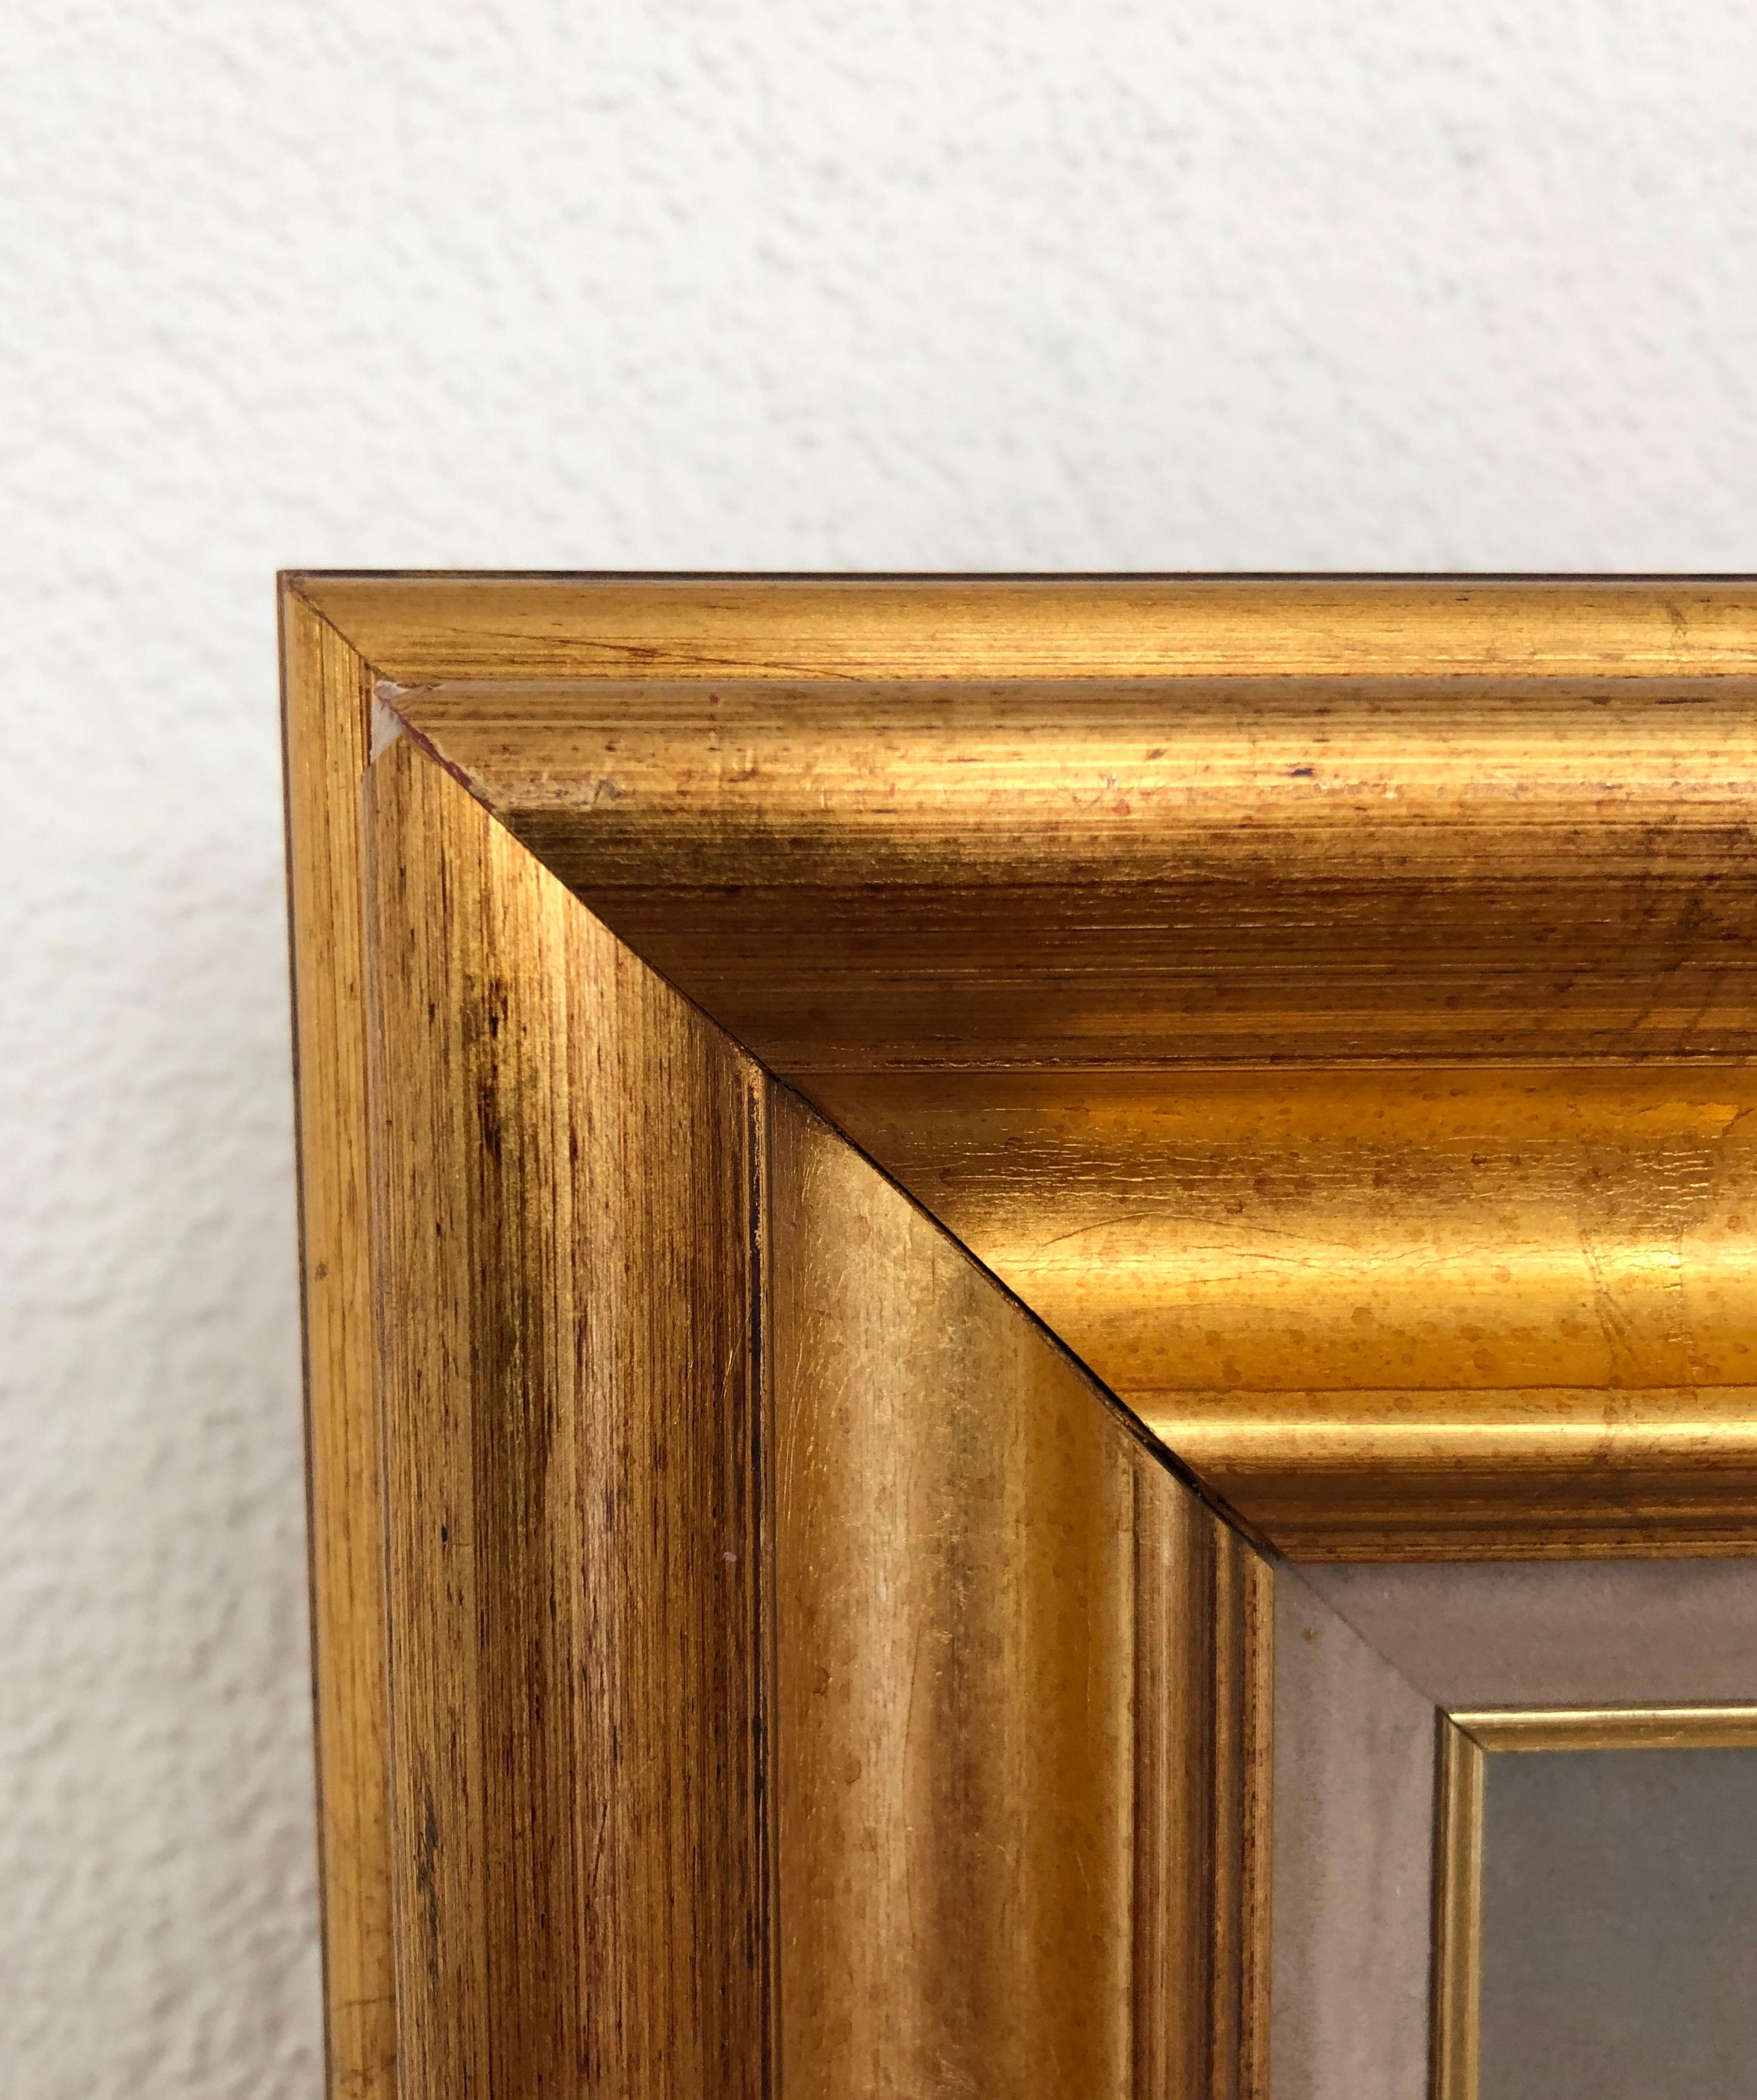 Artwork on cardboard
Golden wooden frame
36.2 x 47.7 x 5 cm